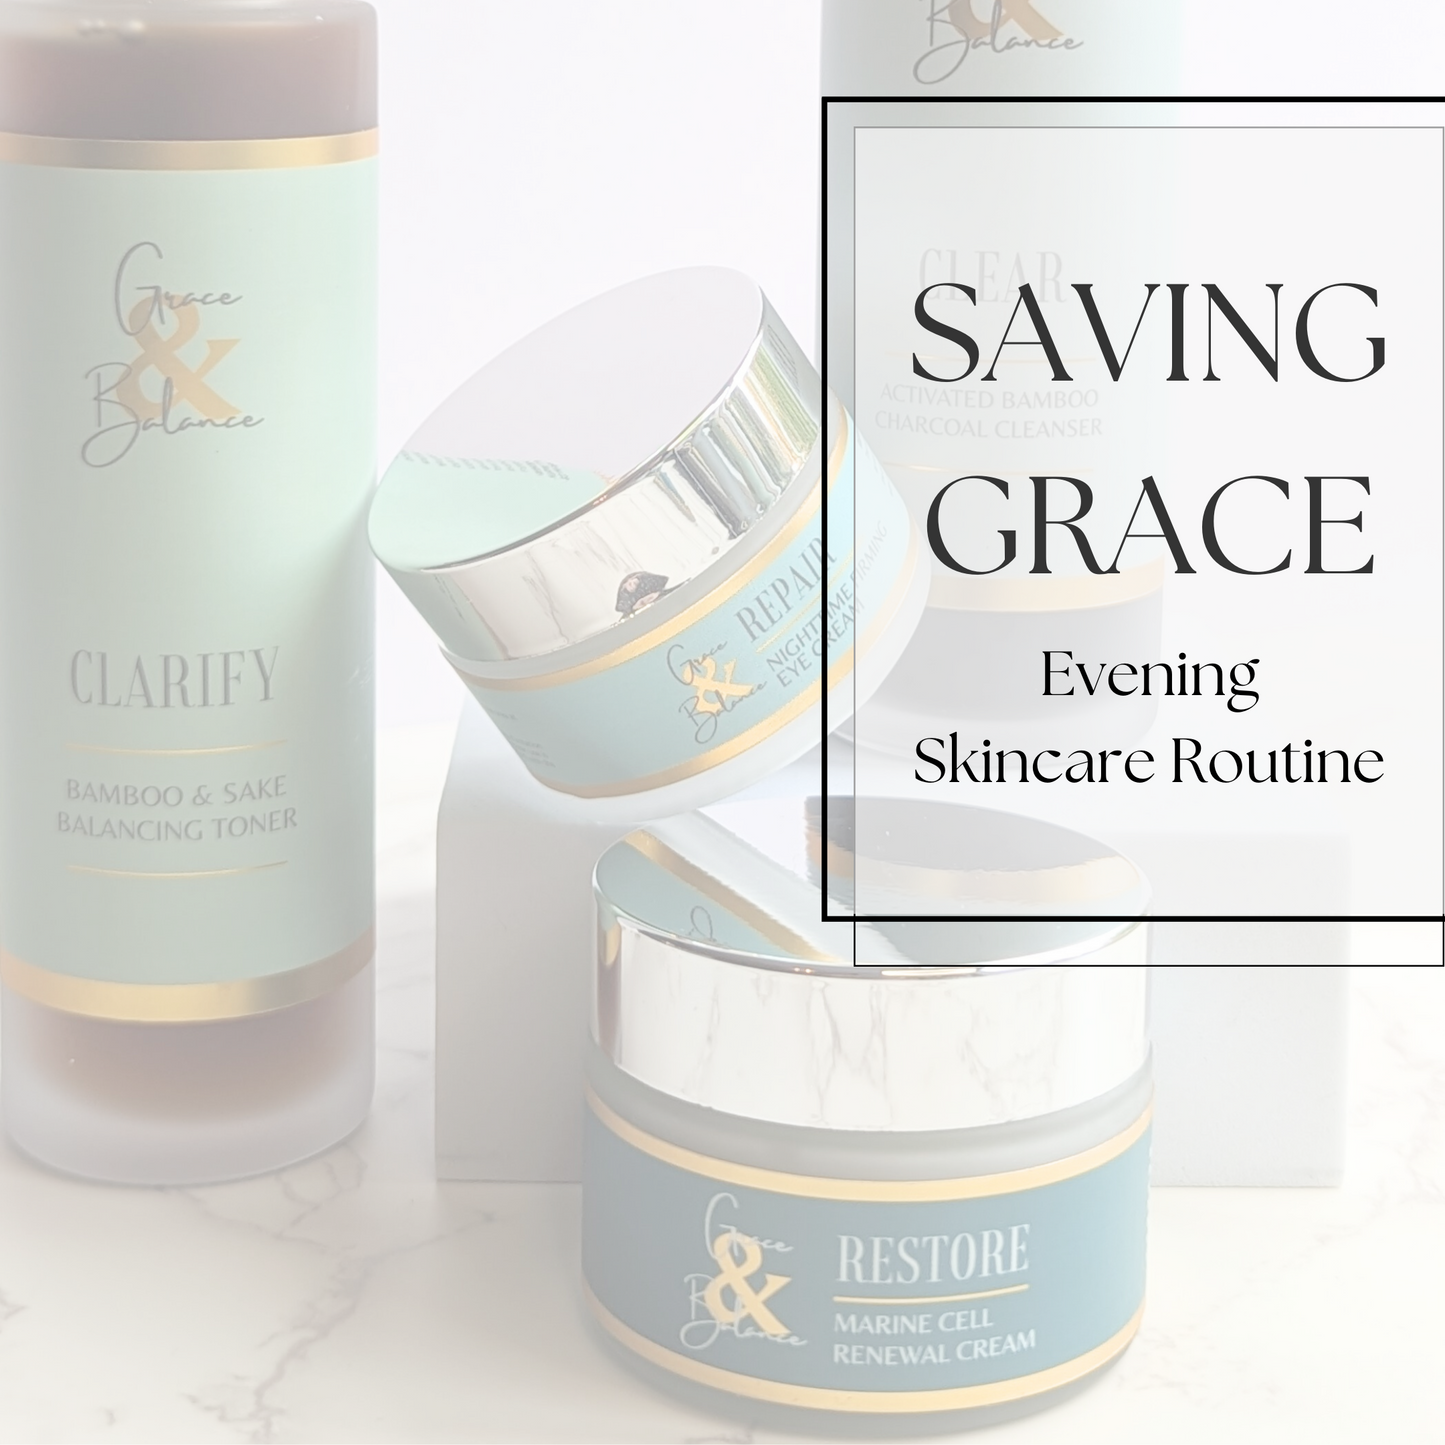 Saving Grace Evening Routine